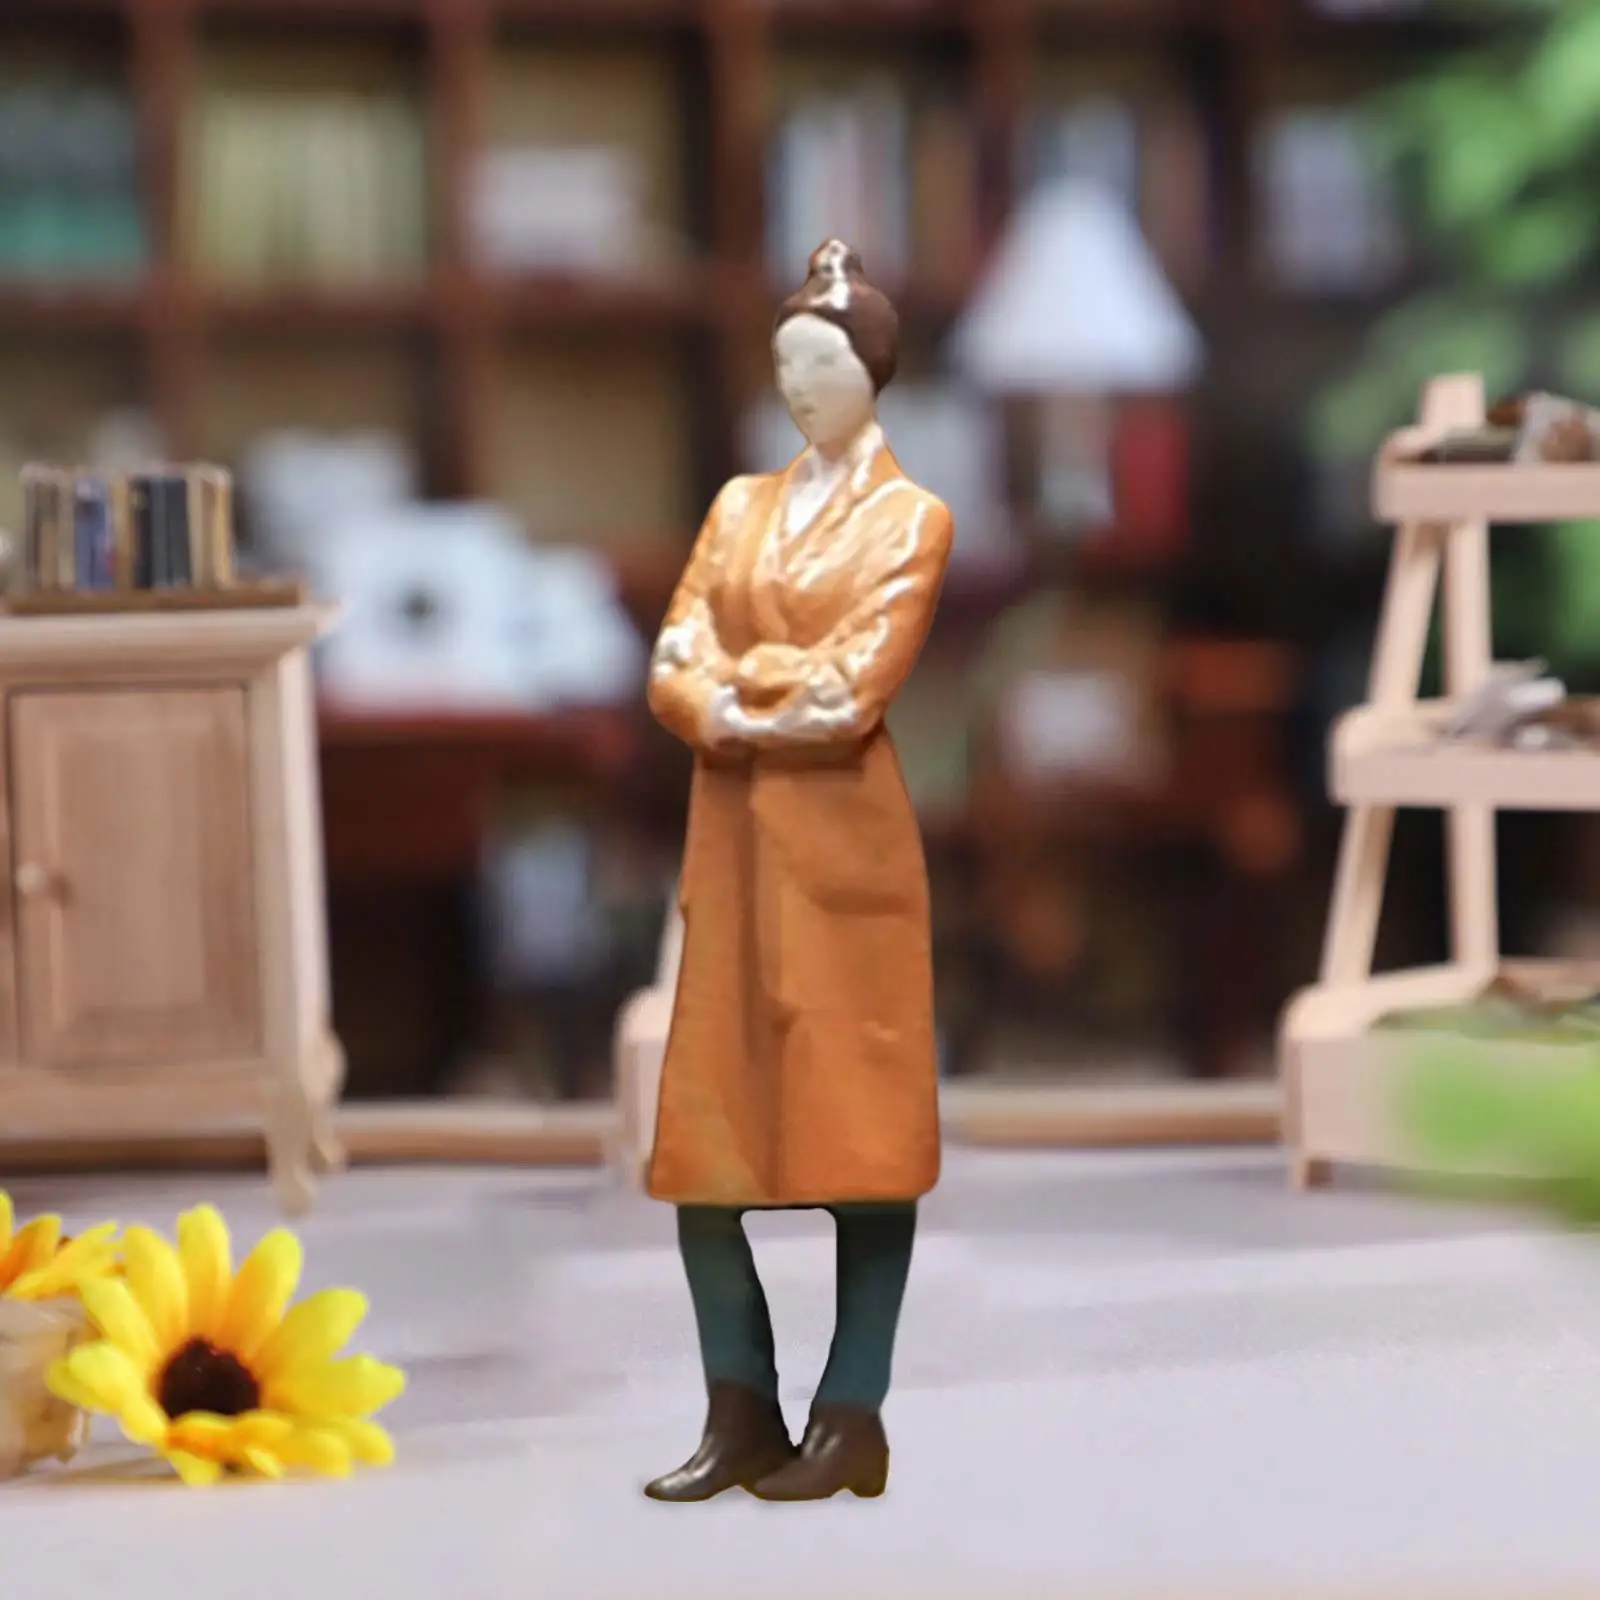 1/64 Girl Figure Miniature Handpainted Model for Props Desk Ornament Layout